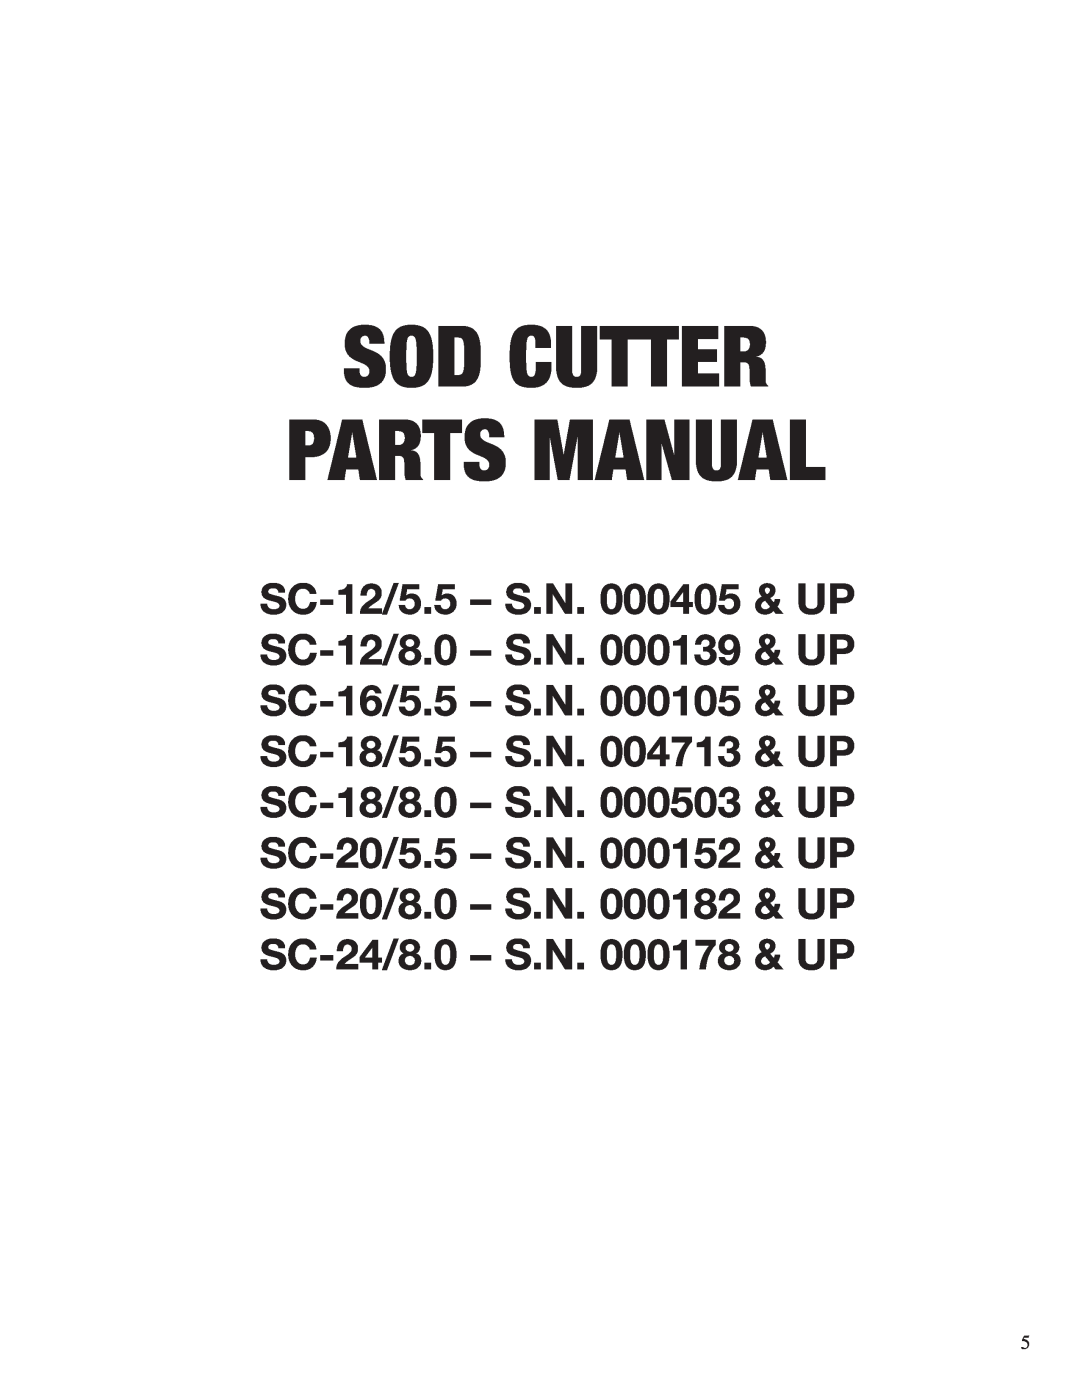 Classen SC-20/5.5, SC-12/5.5, SC-16/5.5, SC-12/8.0, SC-20/8.0, SC-18/8.0, SC-18/5.5 manual Sod Cutter Parts Manual 